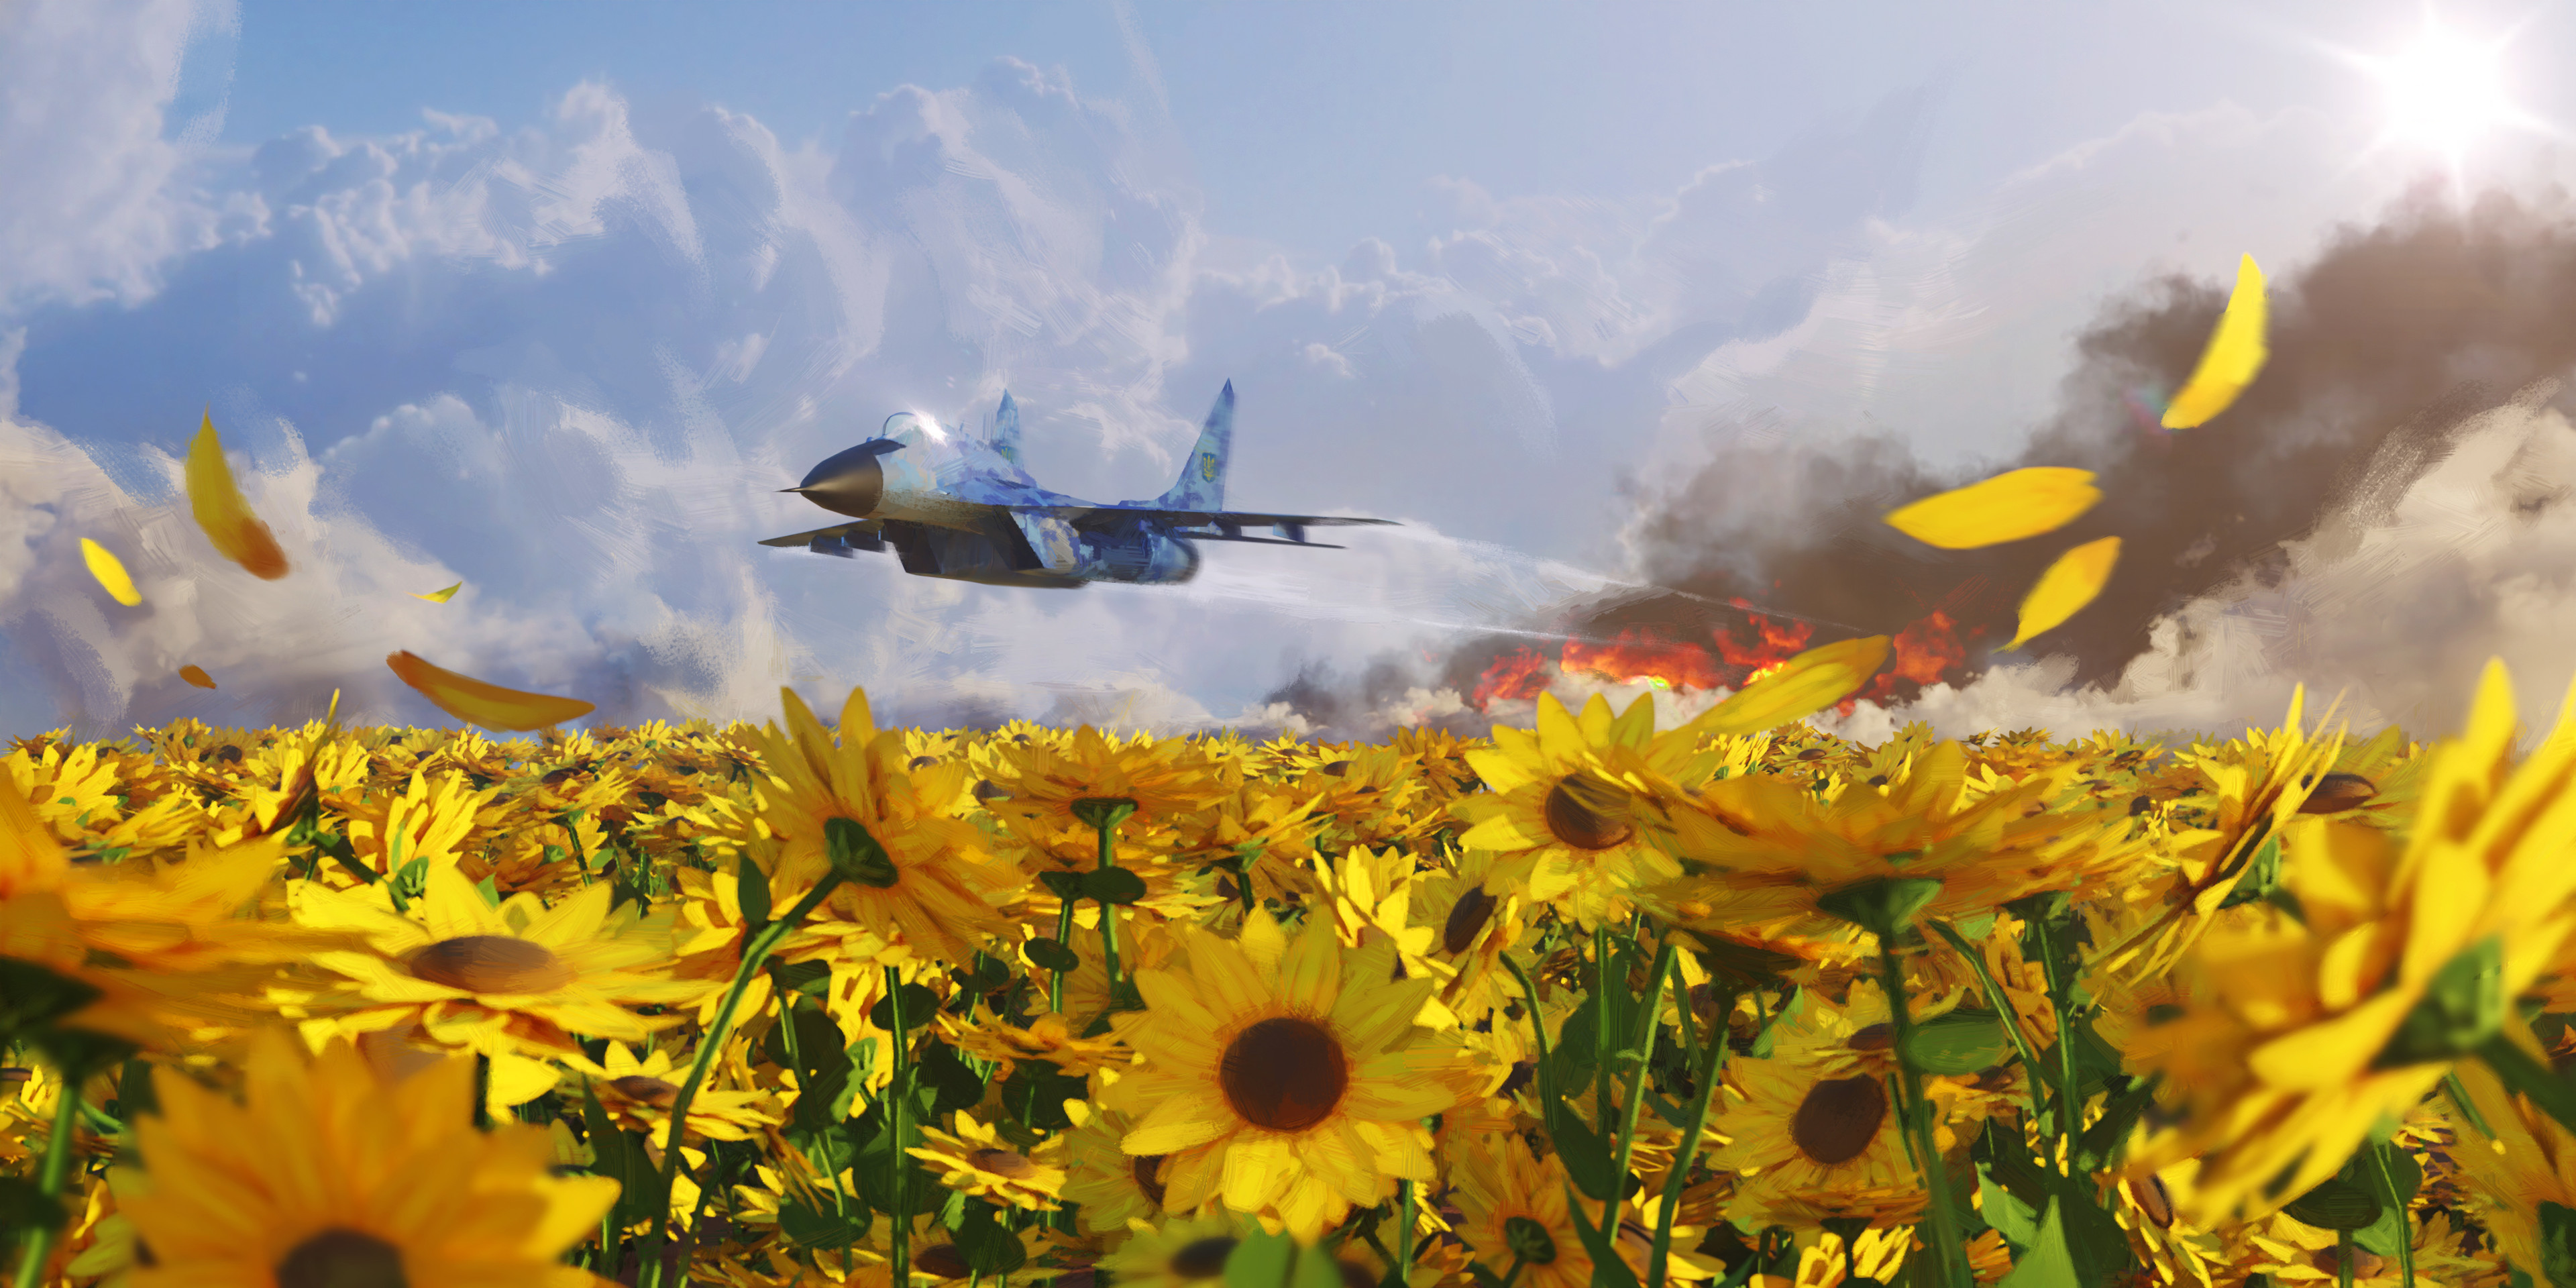 General 3840x1920 Rostyslav Zagornov painting digital art artwork illustration airplane flowers clouds flying sunflowers nature field sky petals sunlight